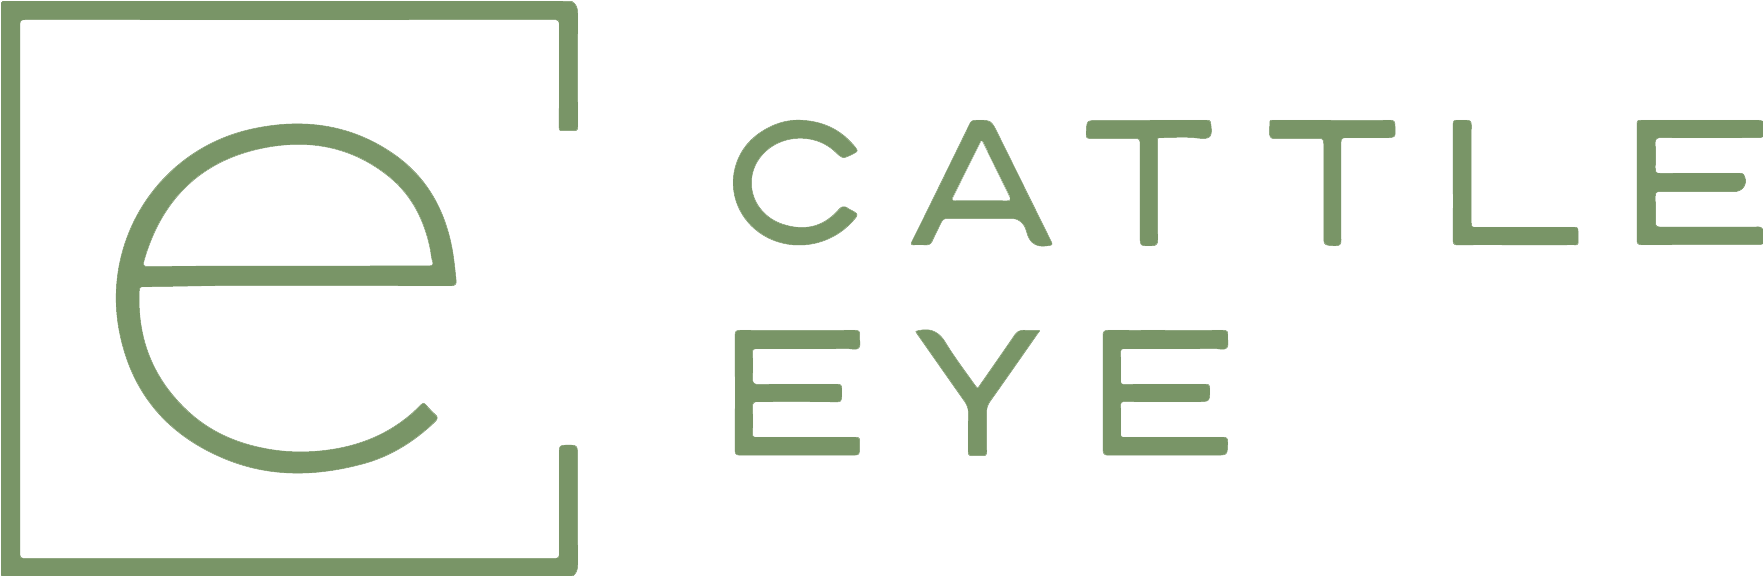 cattleeye-green